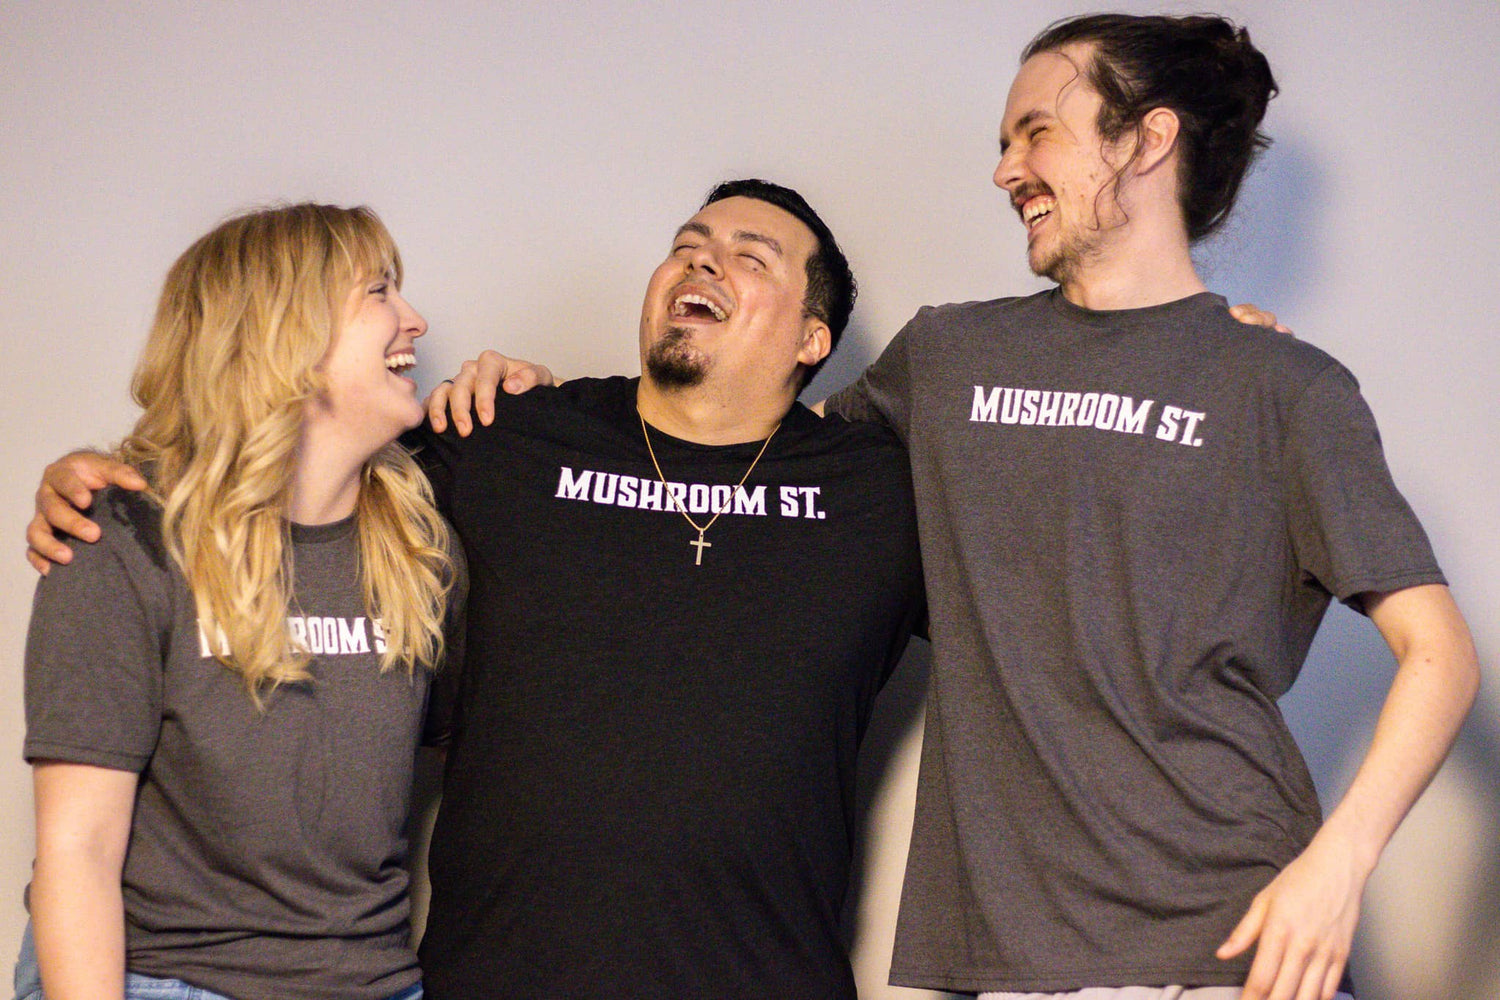 Sophie, Alejandro, and Christian smiling together wearing Mushroom Street shirts